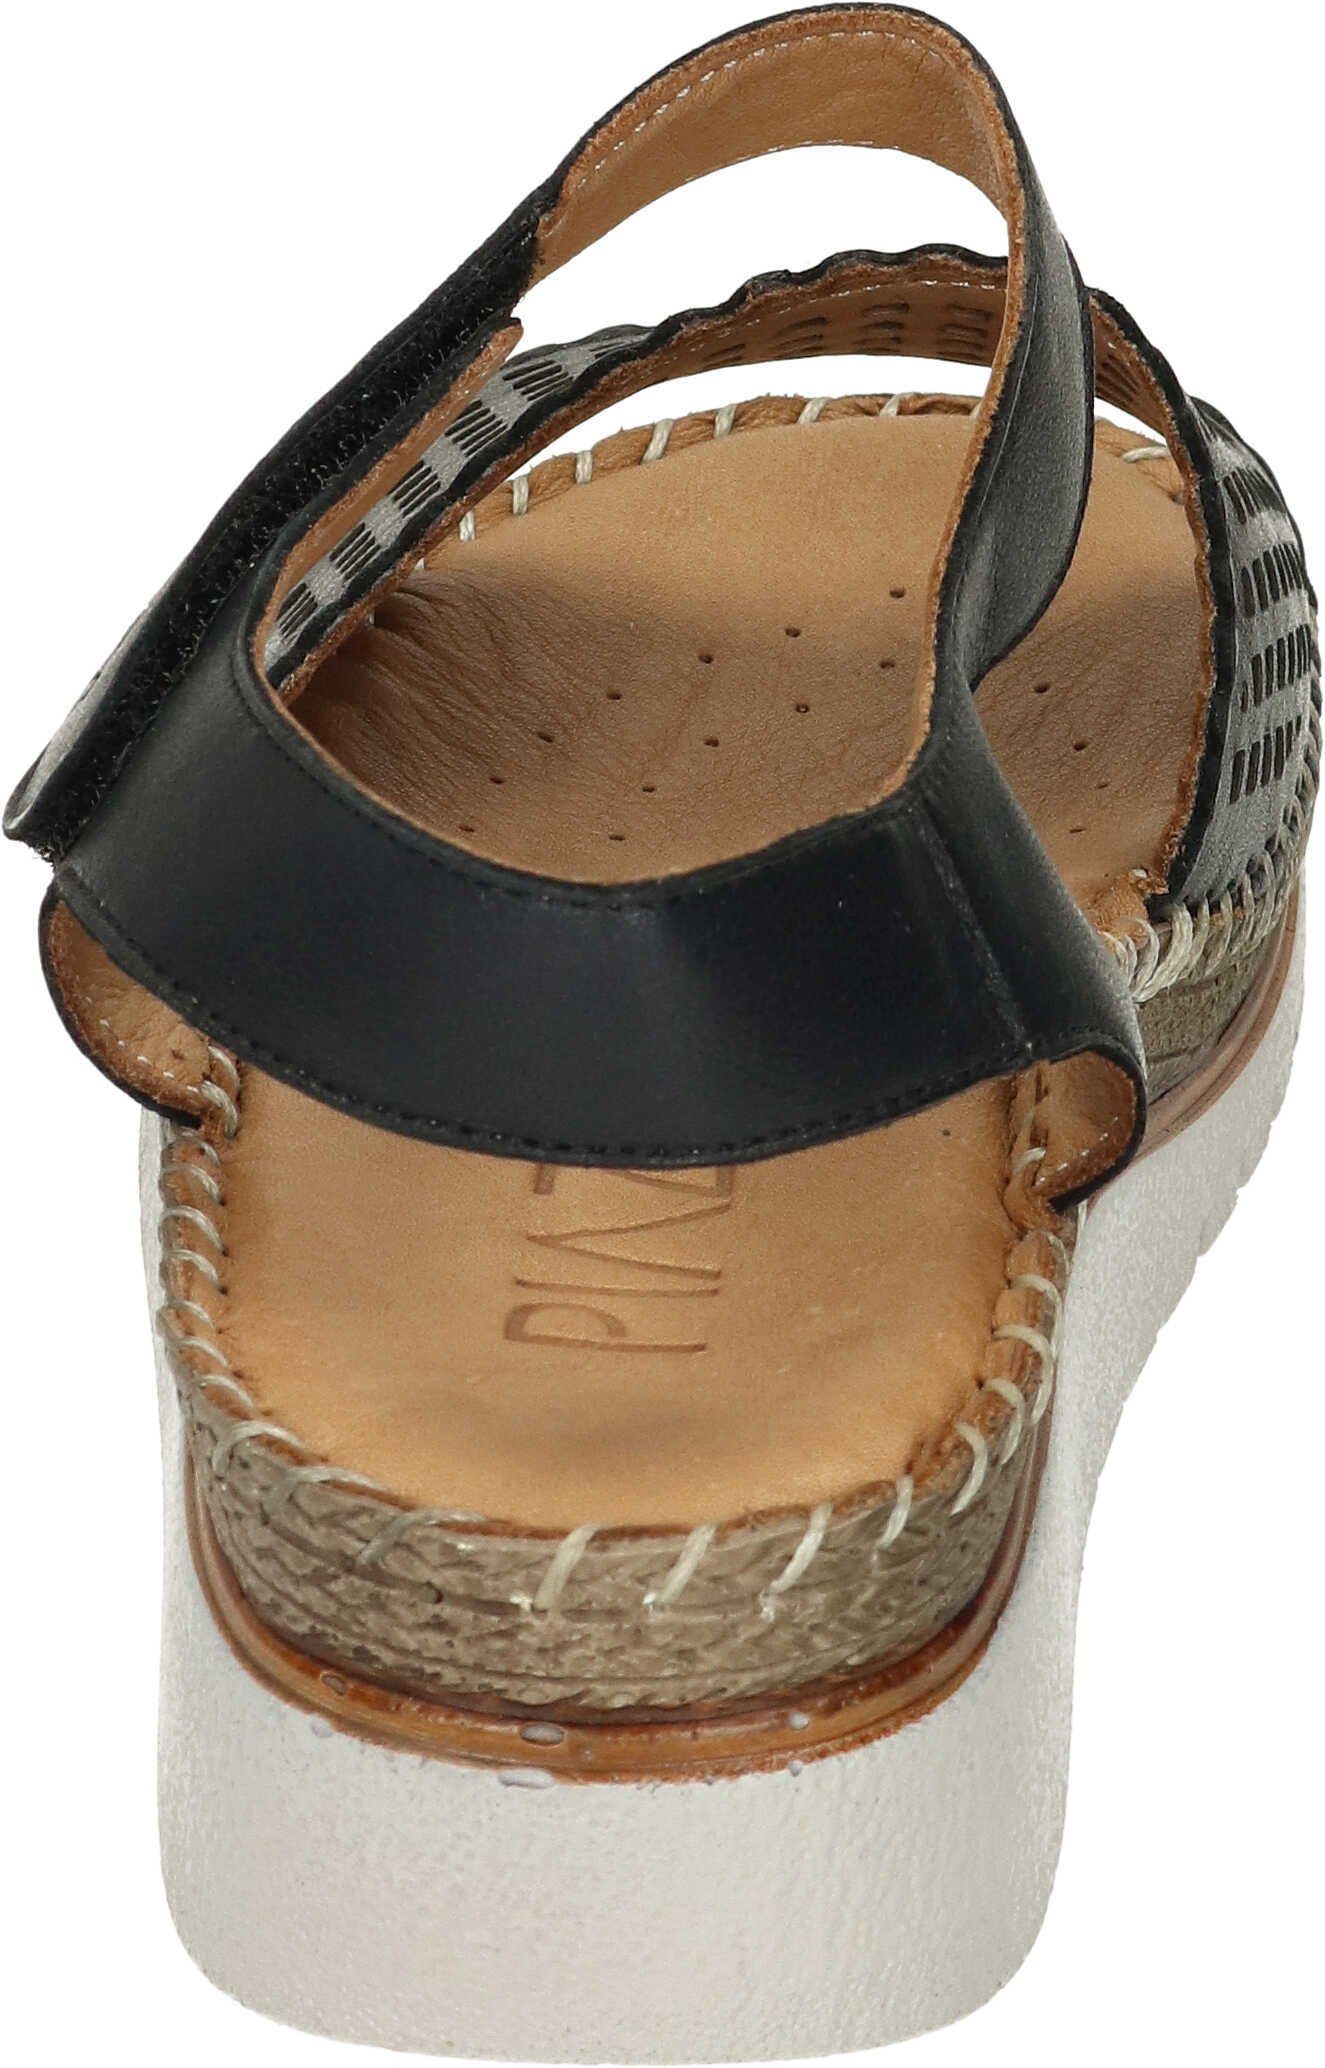 Sandalen aus Sandalette Piazza schwarz echtem Leder